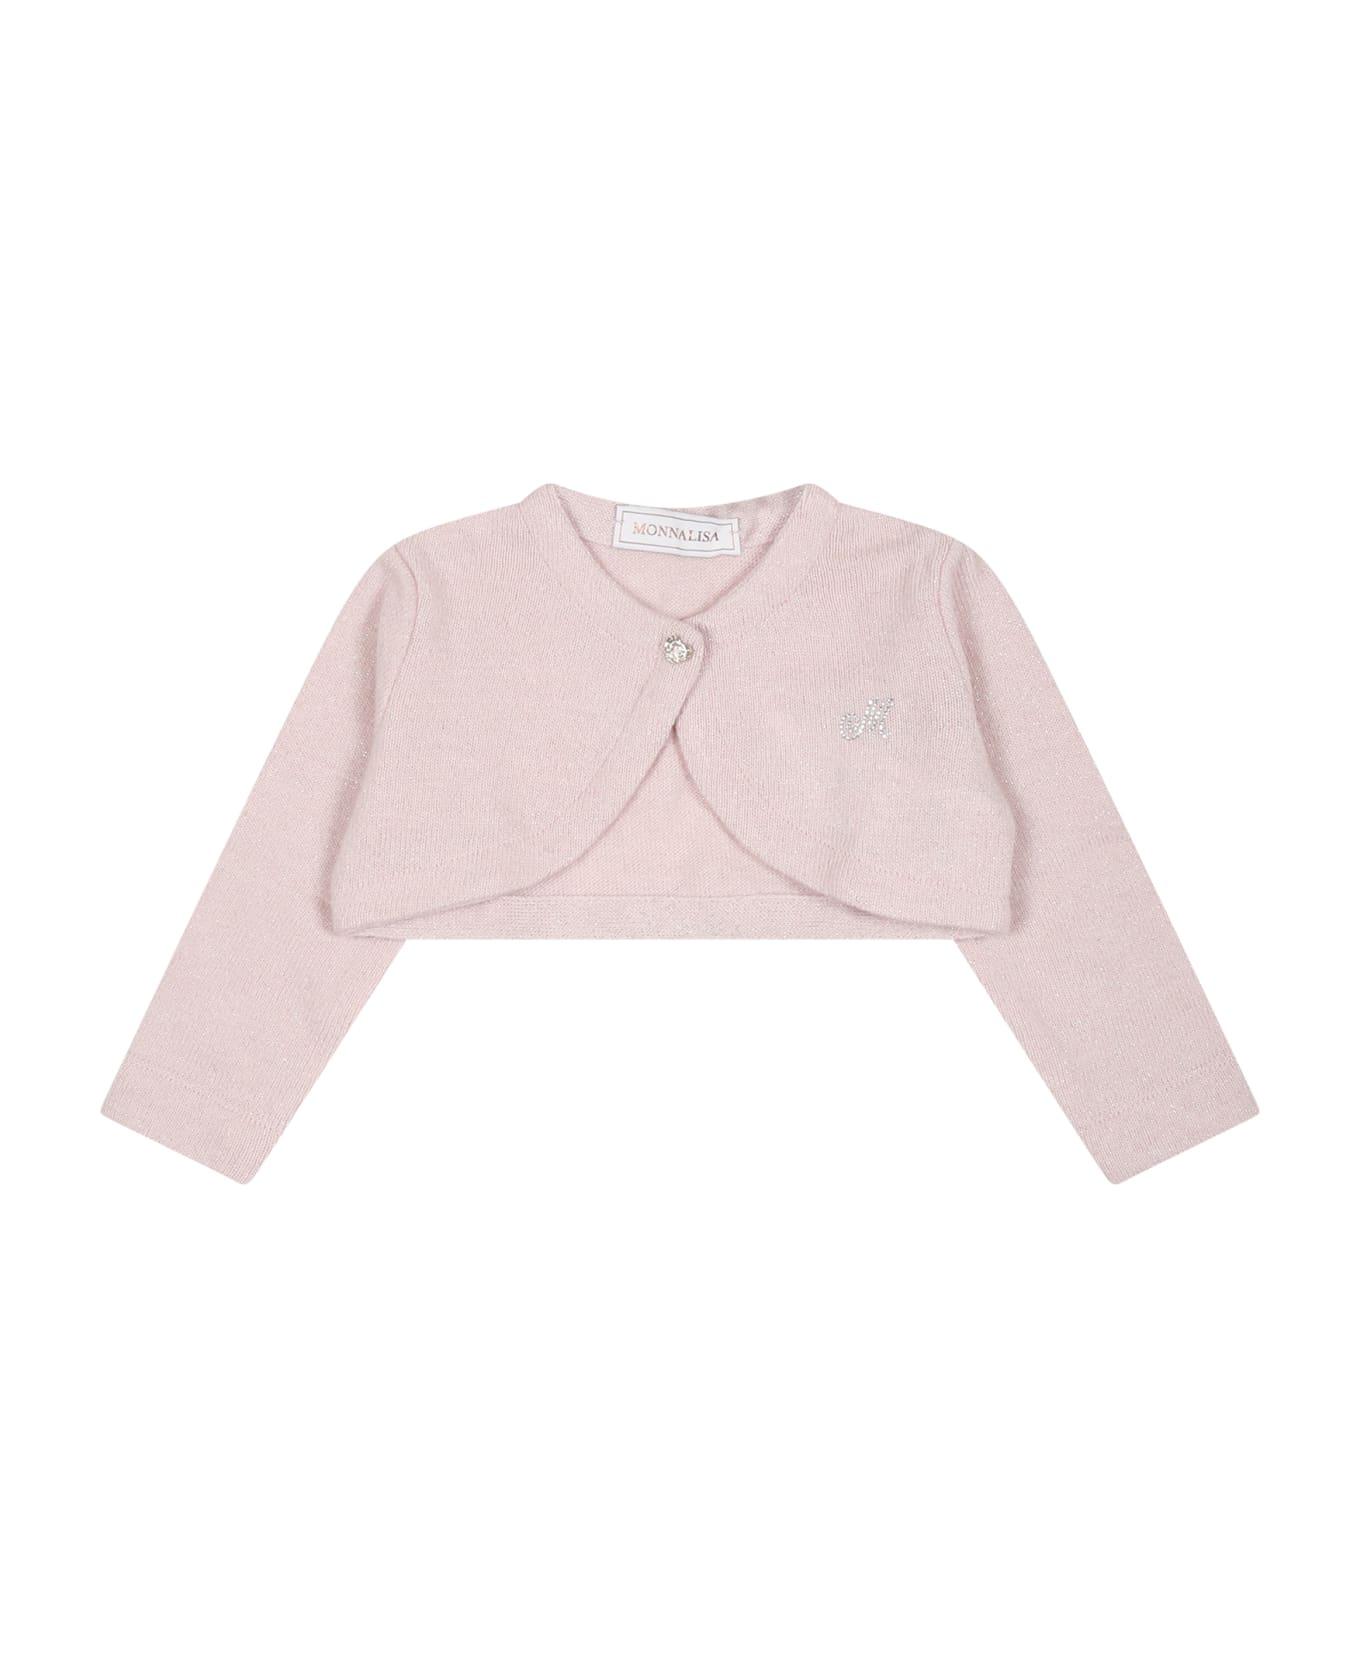 Monnalisa Pink Cardigan For Baby Girl With Logo - Pink